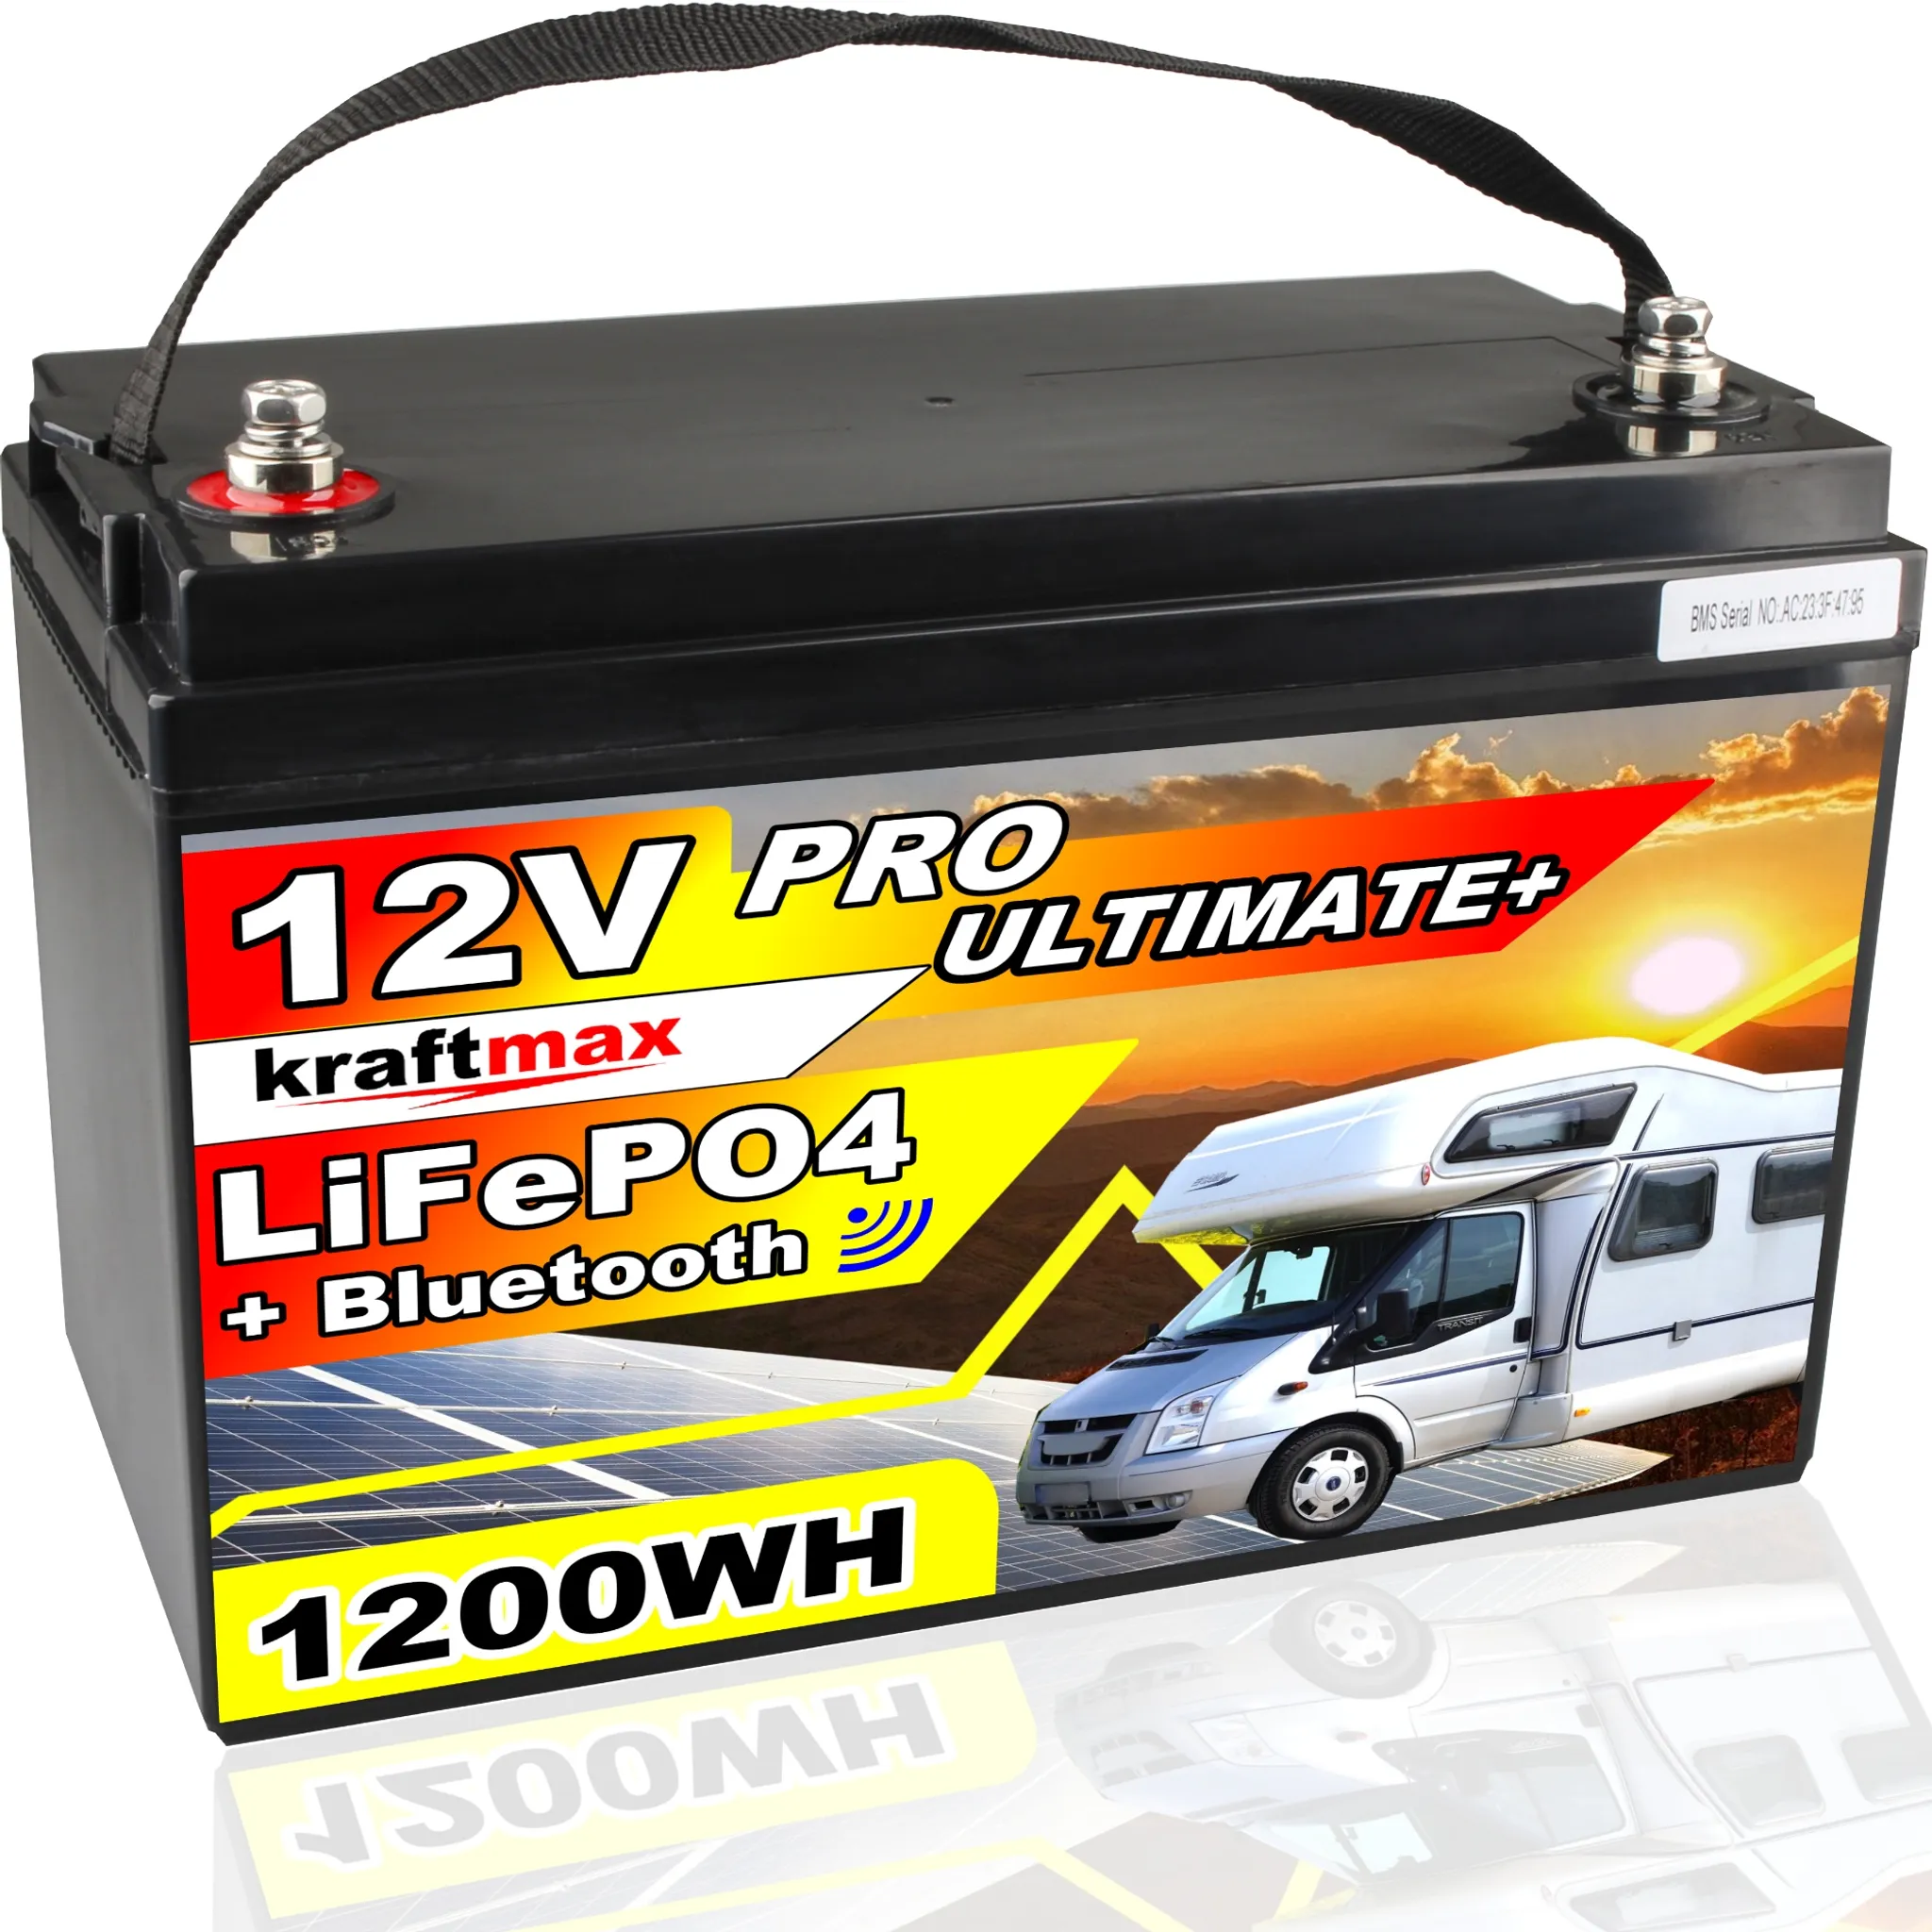 LiFePO4 Akku 12V 3Ah mit BMS (Batterie Management System)